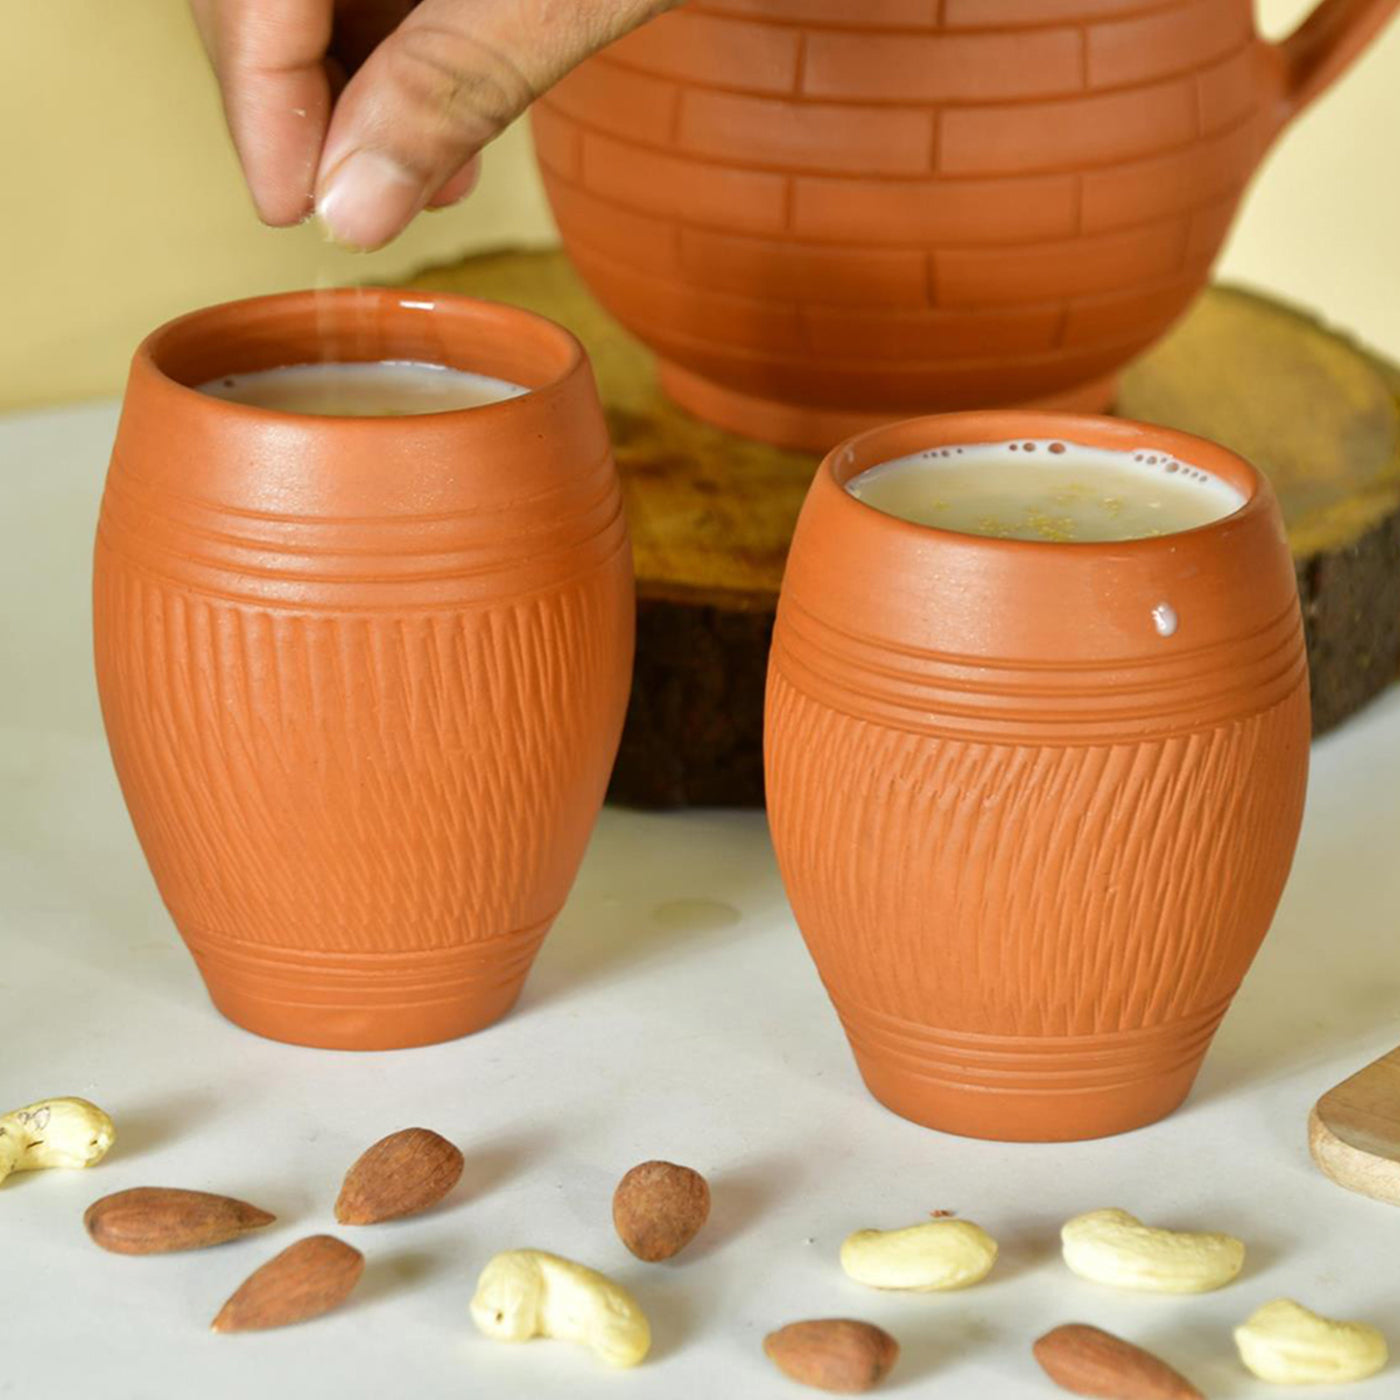 Terracotta Lassi Mug Set Artisanal Elegance, Functional Design.